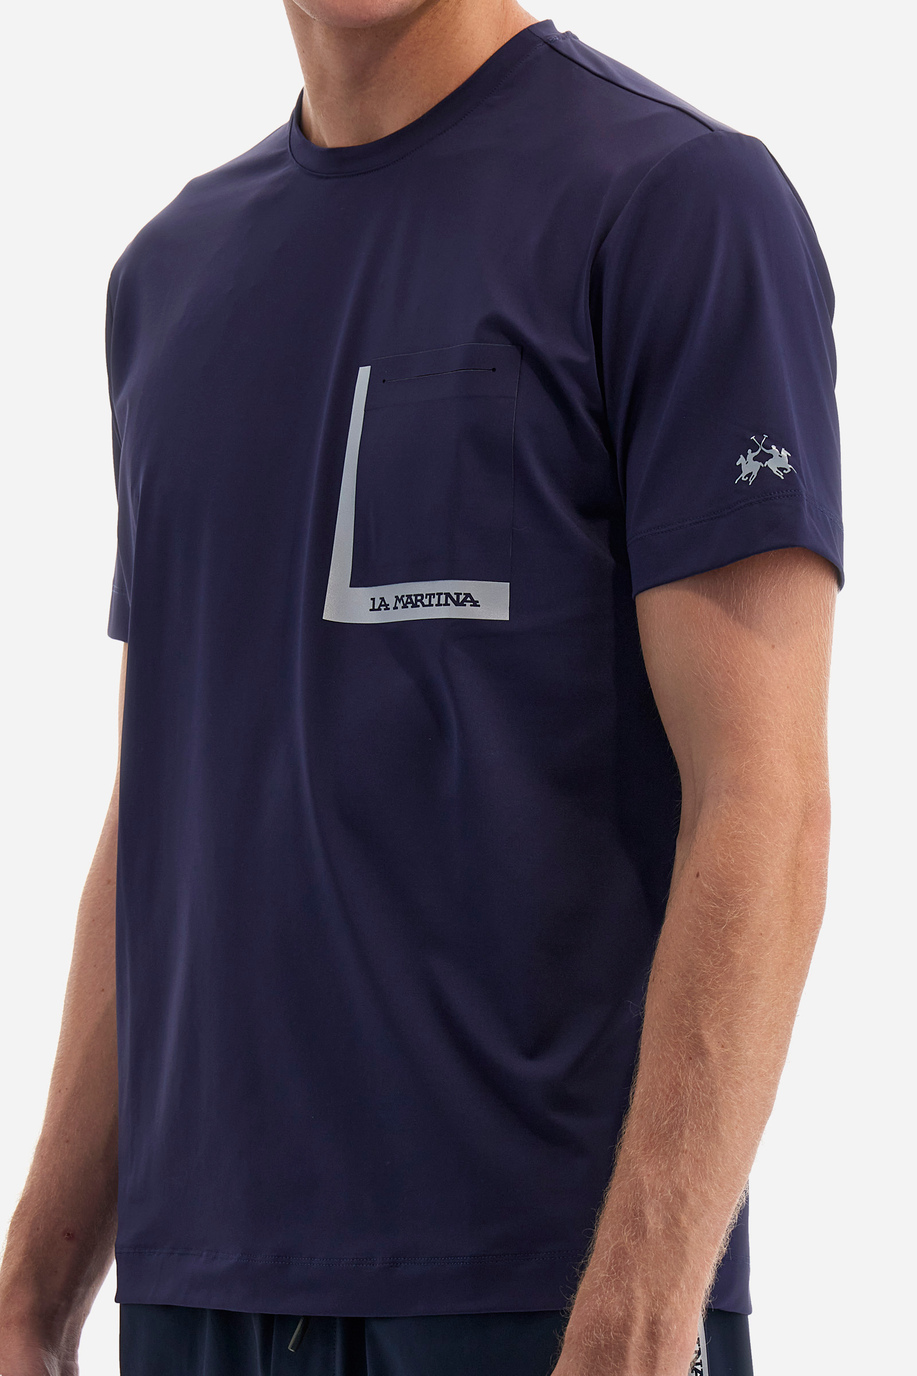 T-shirt regular fit in tessuto sintetico - Ynyr - Gerard Loft X La Martina | La Martina - Official Online Shop